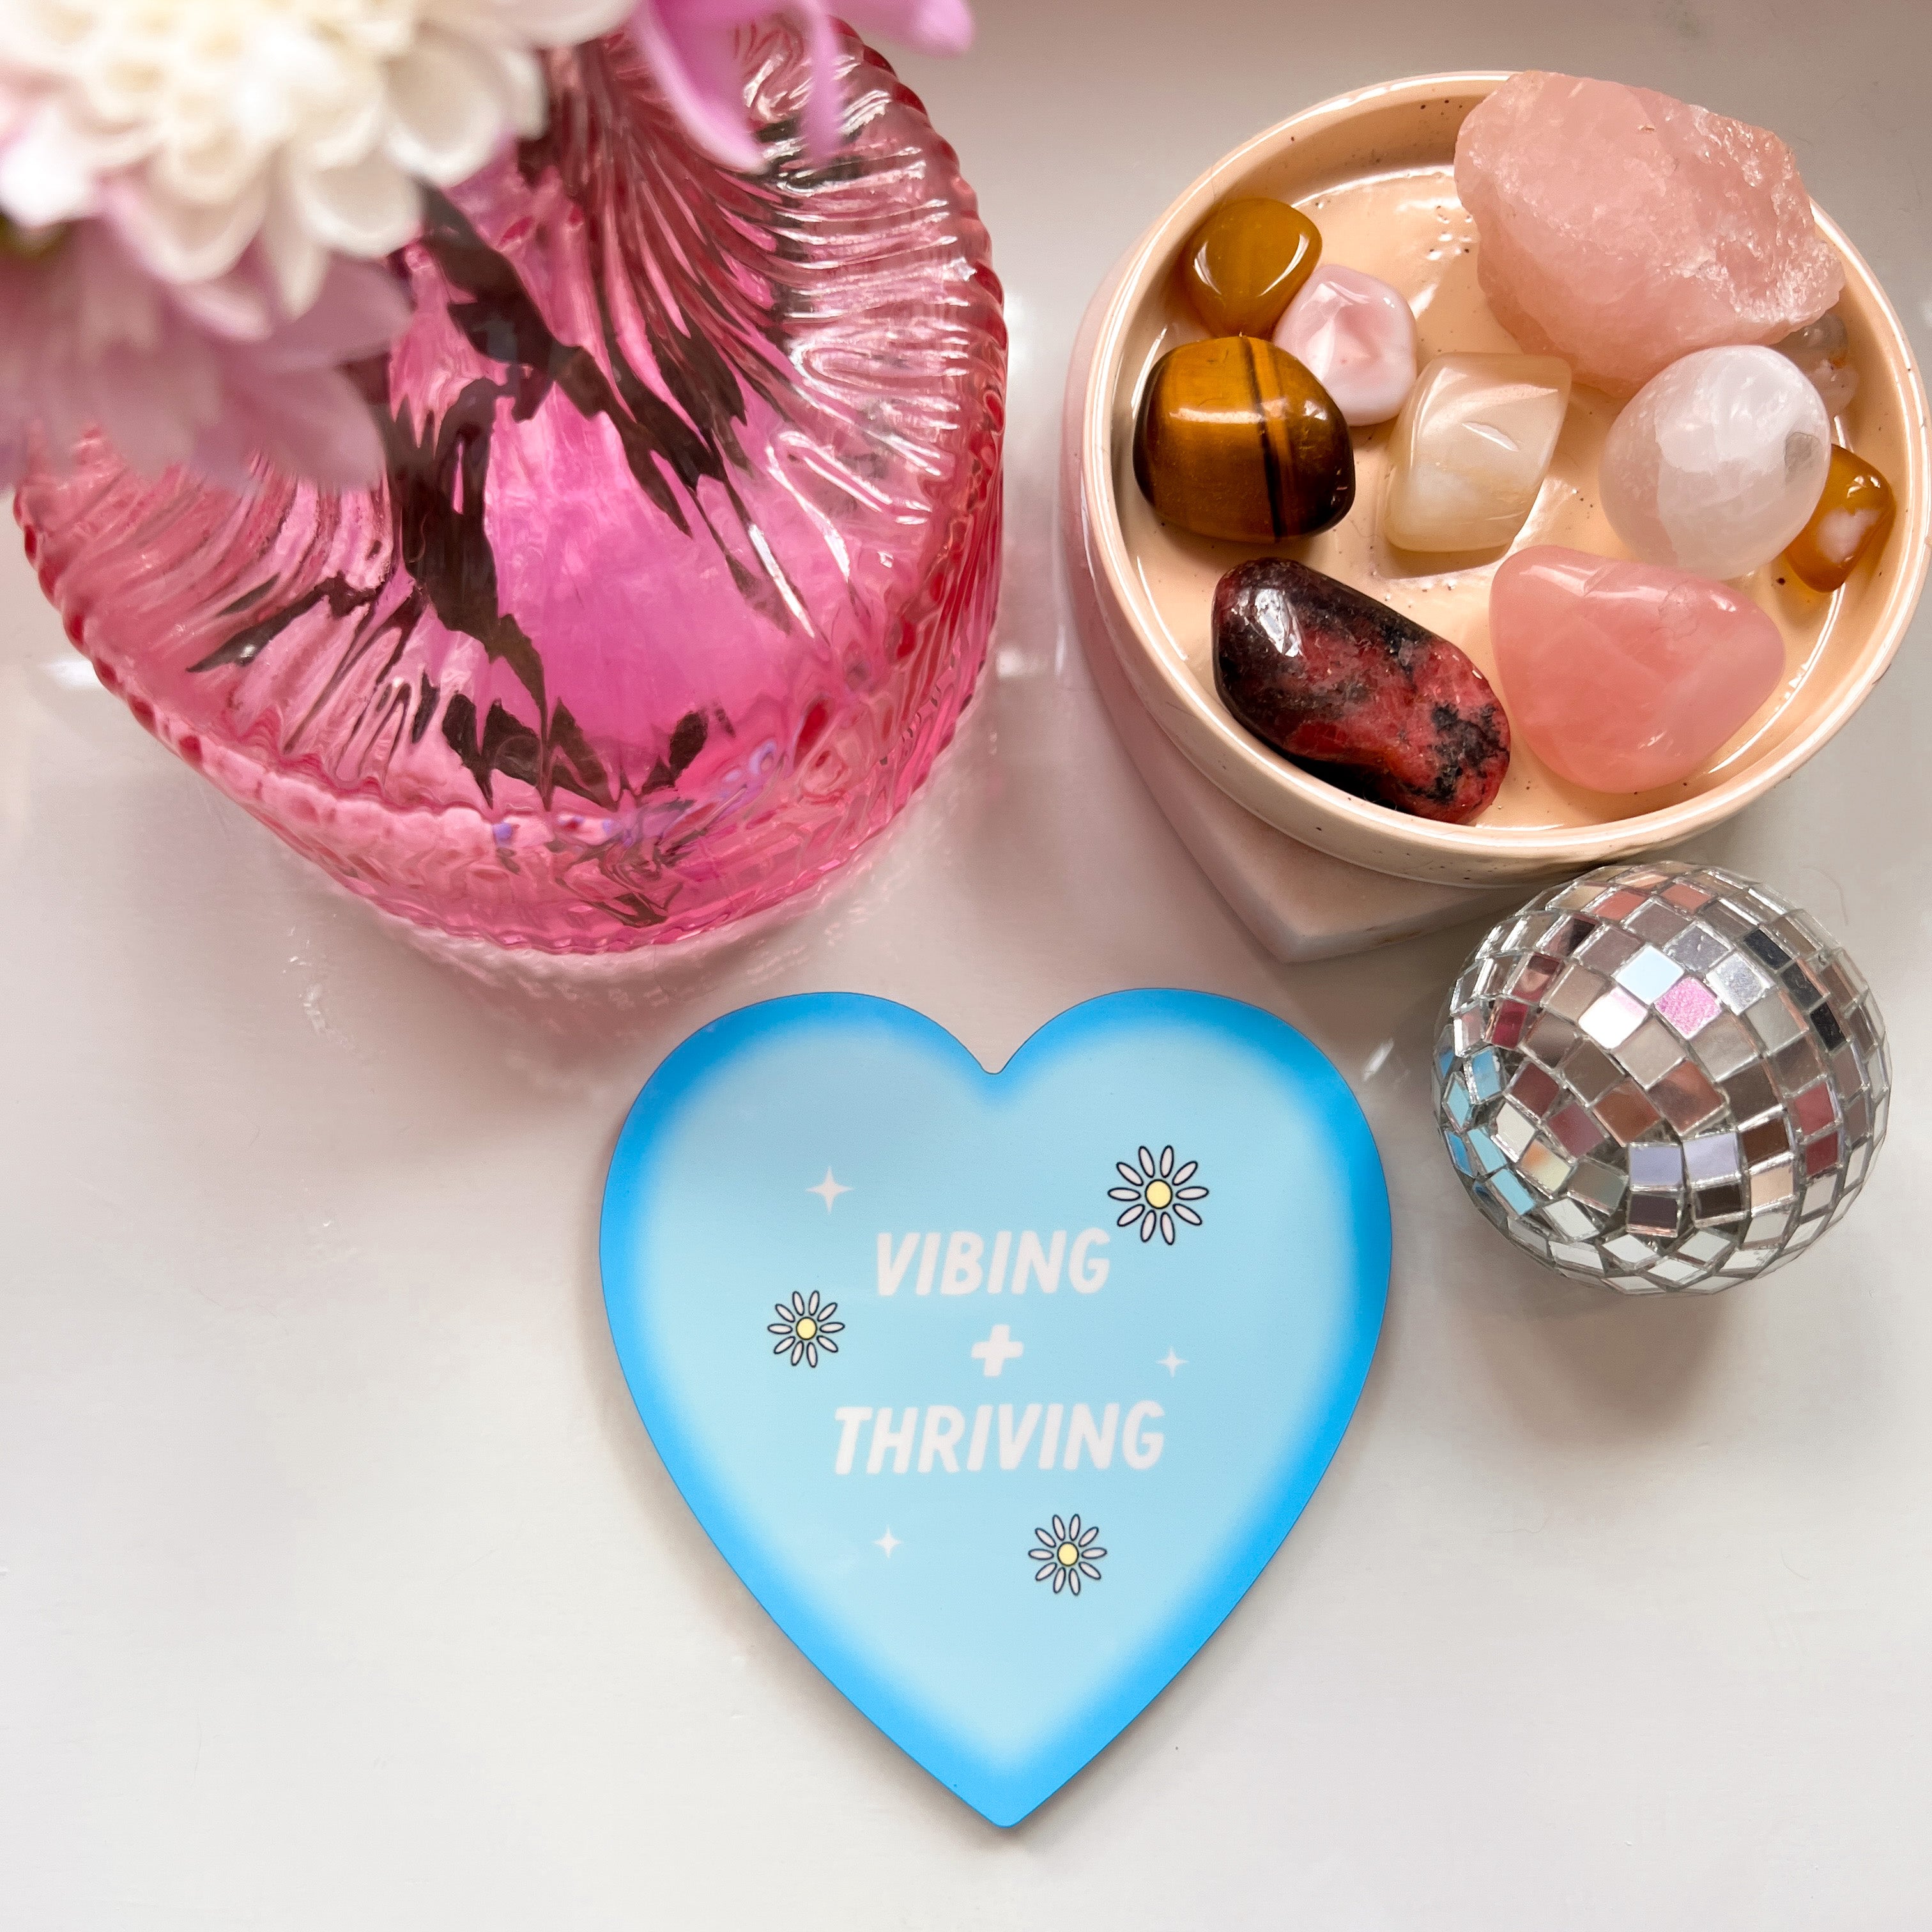 Vibing + Thriving trinket